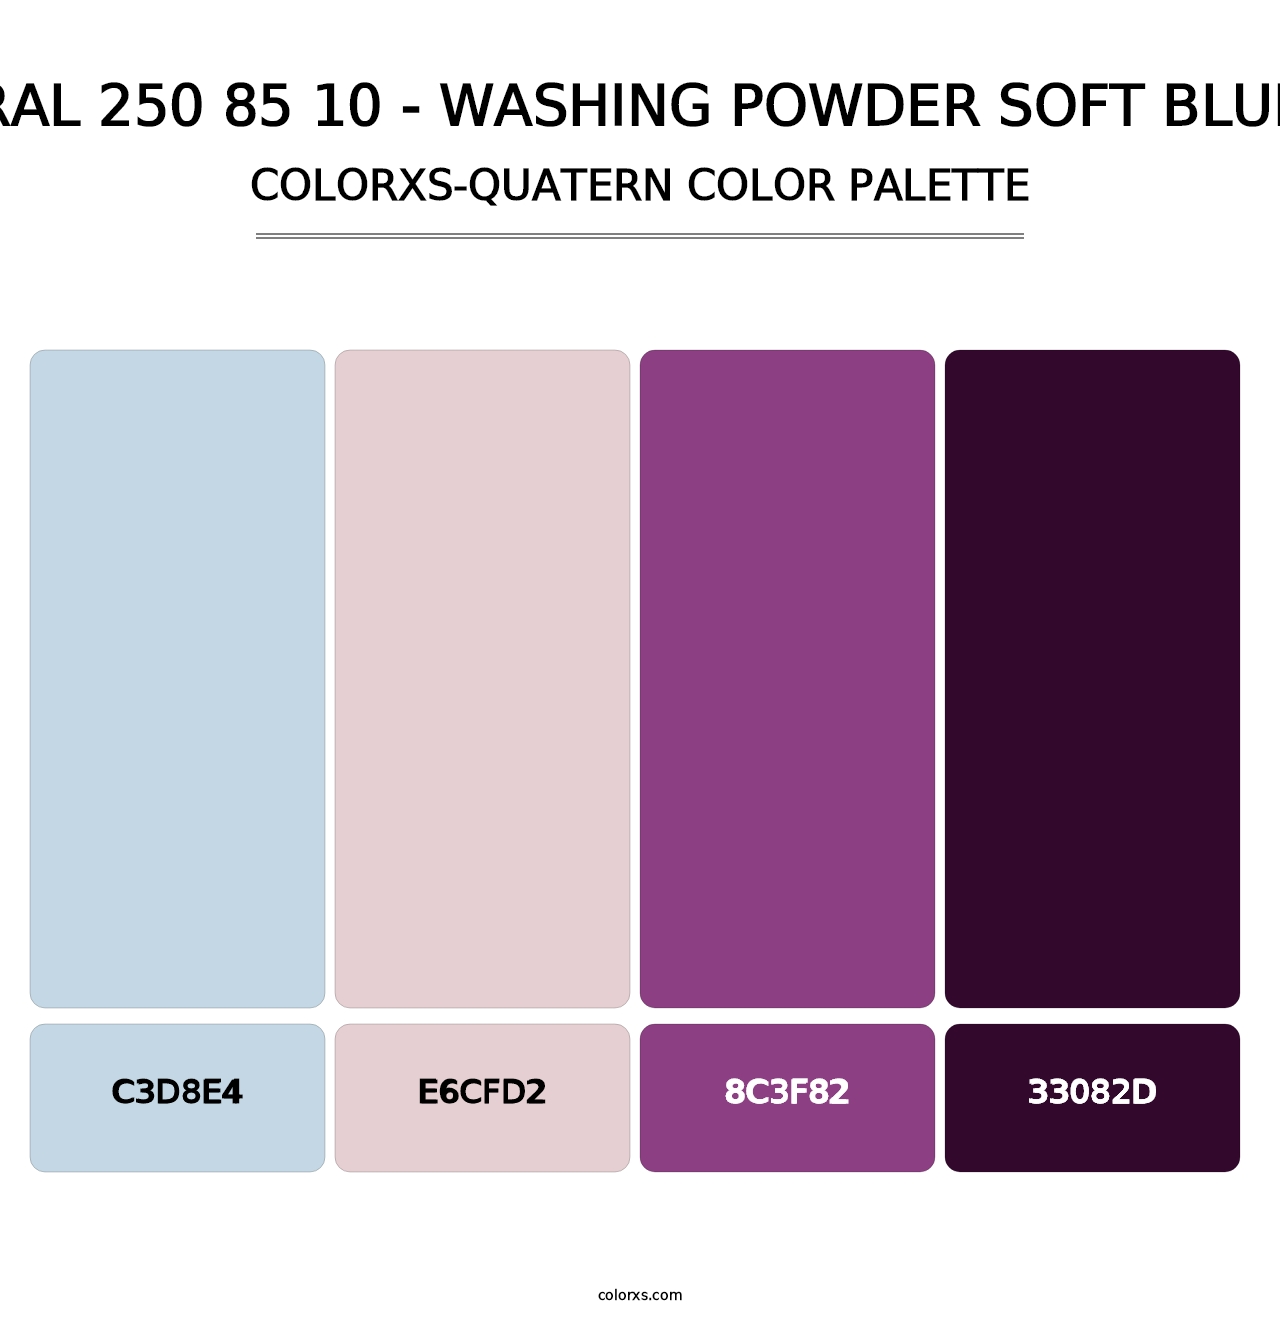 RAL 250 85 10 - Washing Powder Soft Blue - Colorxs Quatern Palette